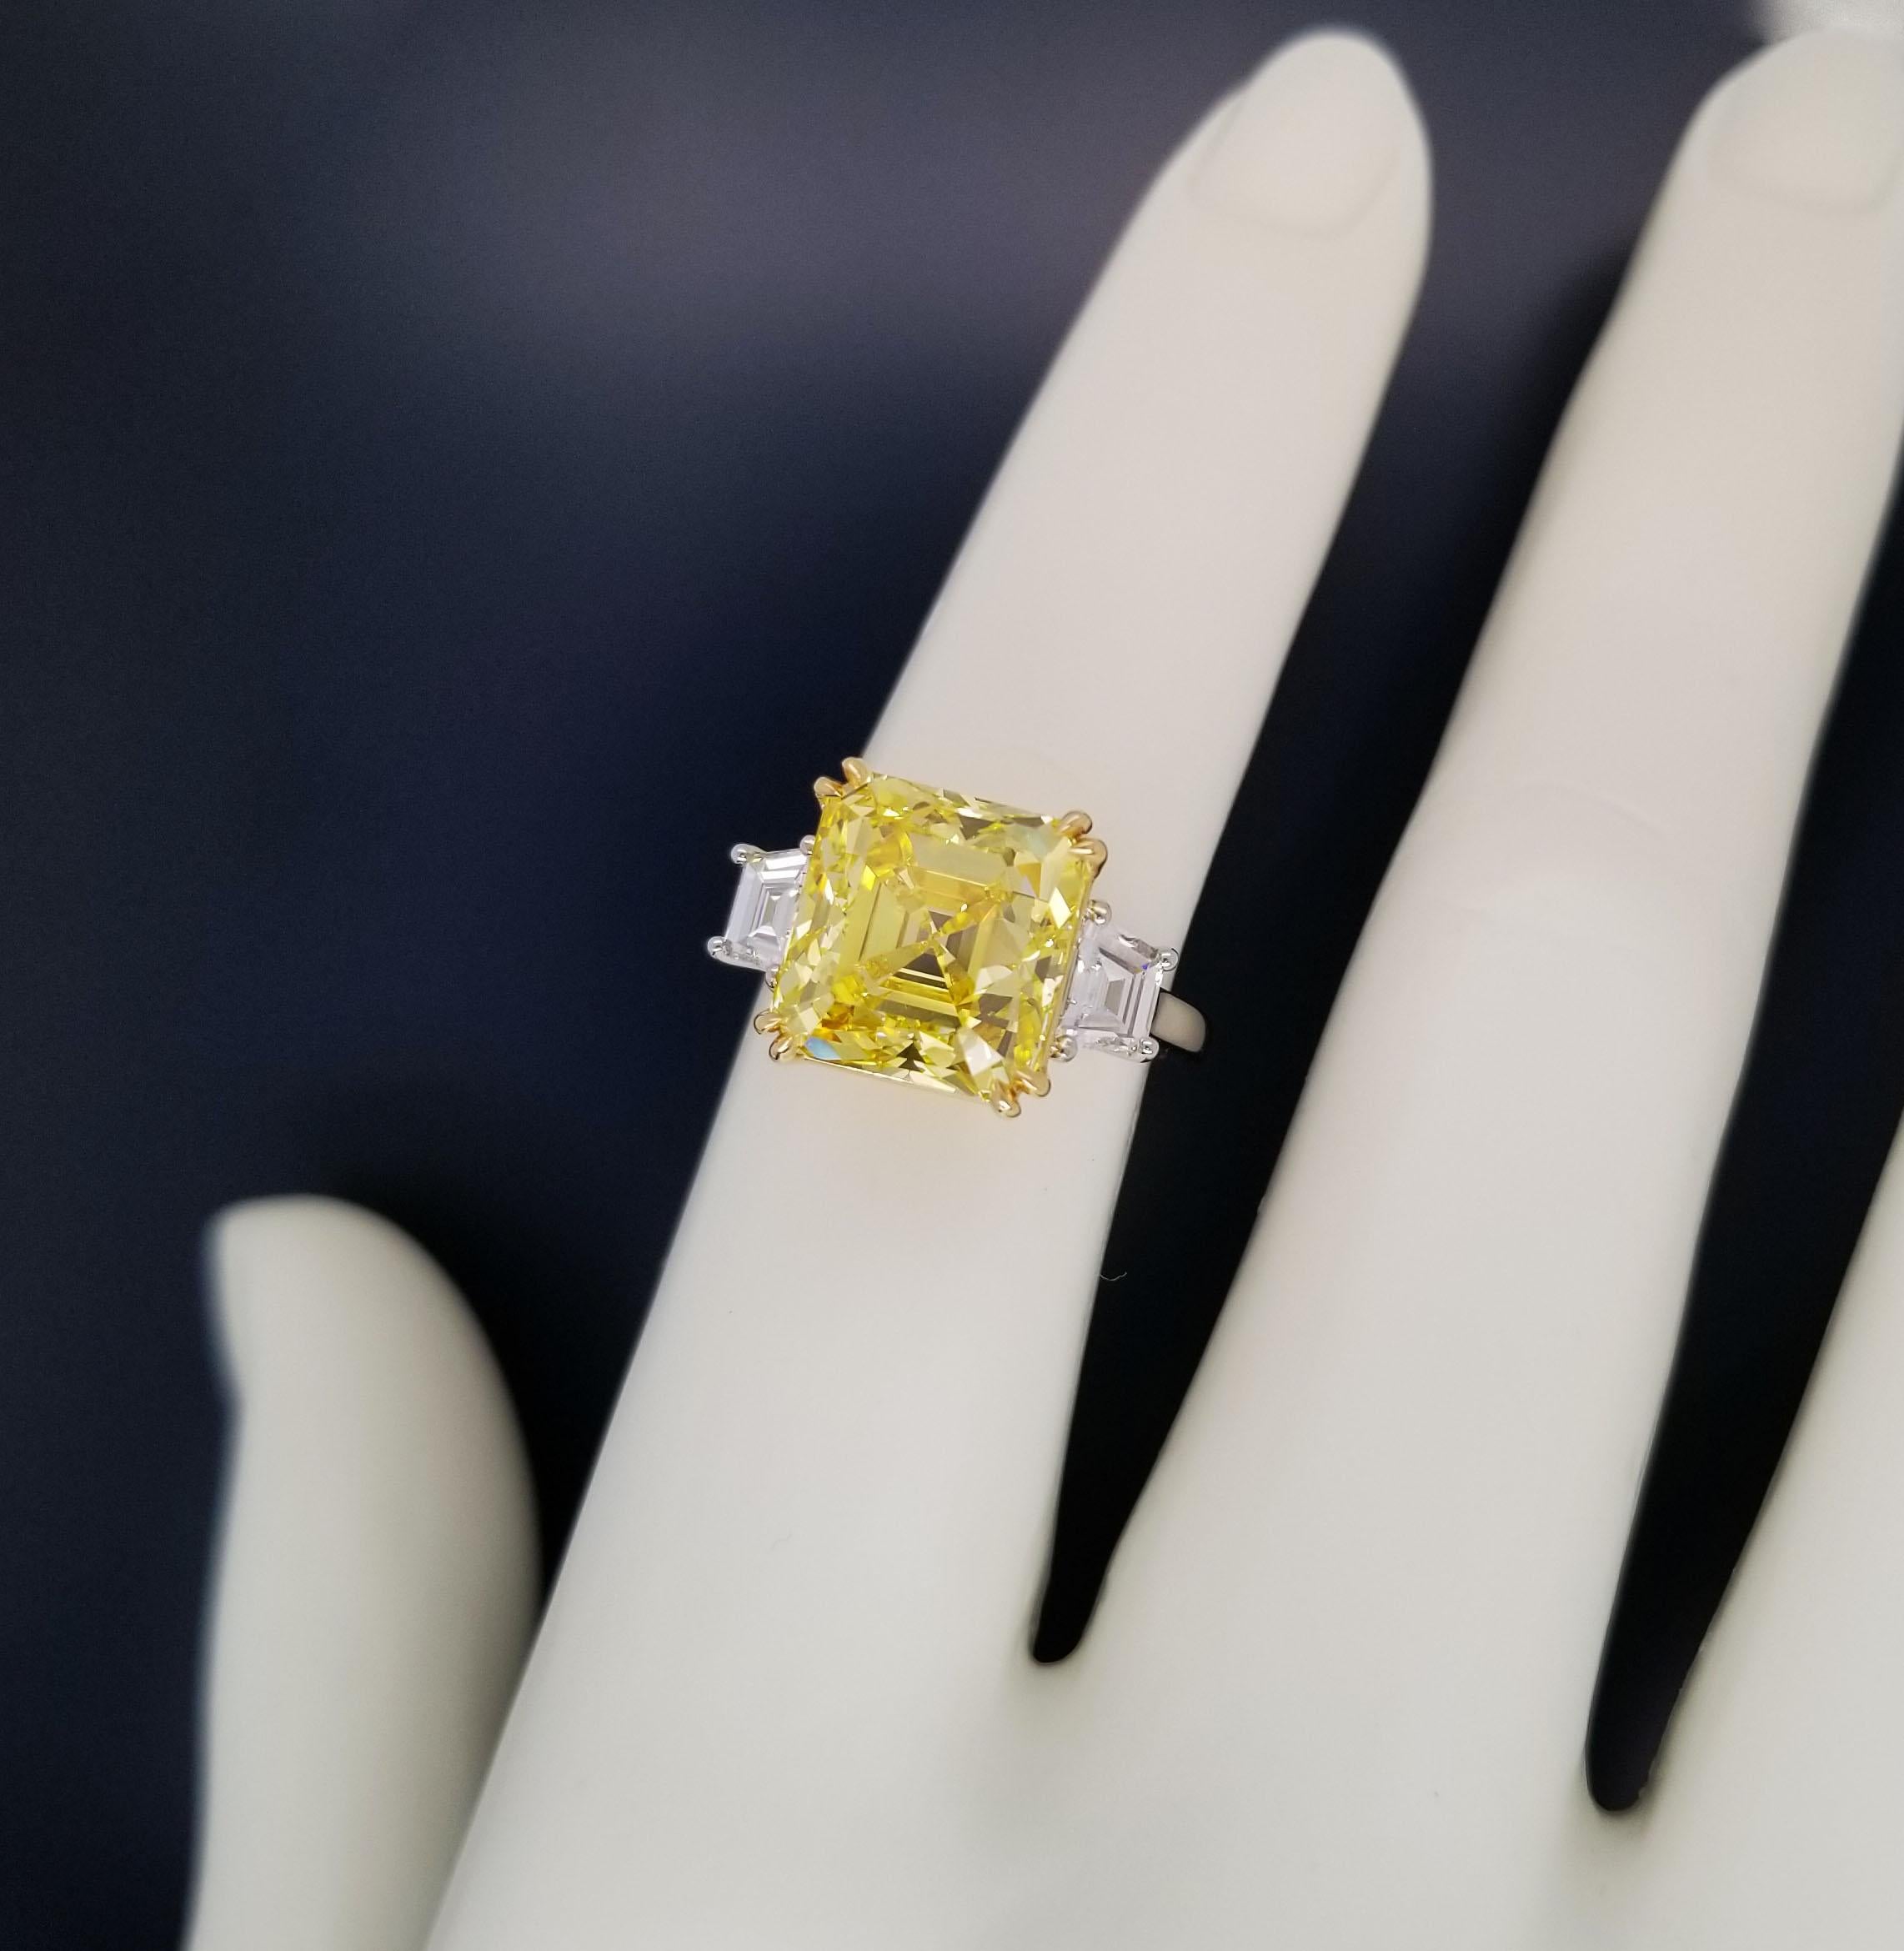 Scarselli 6 Carat Fancy Vivid Yellow Emerald Cut Diamond Ring in Platinum 4